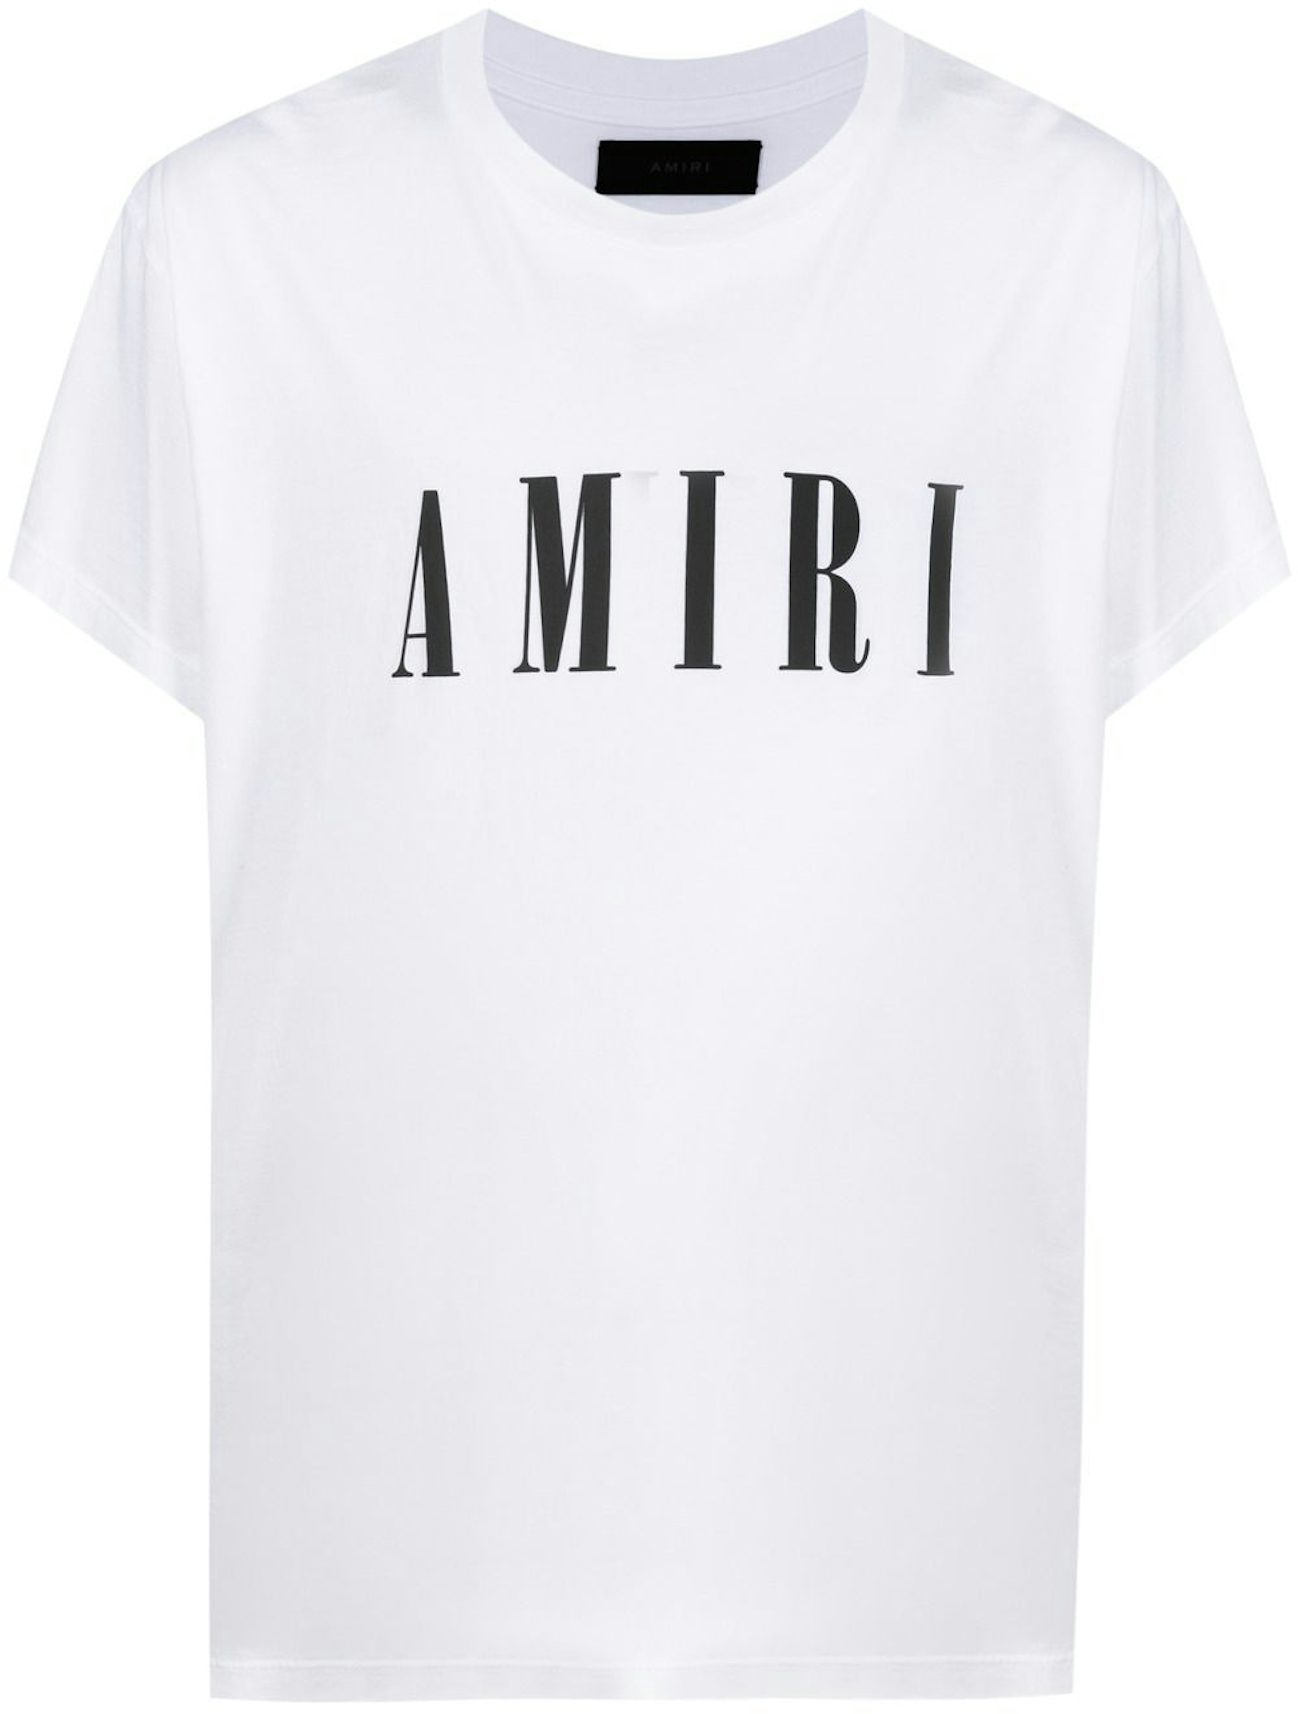 Buy Other Brands AMIRI Streetwear - StockX